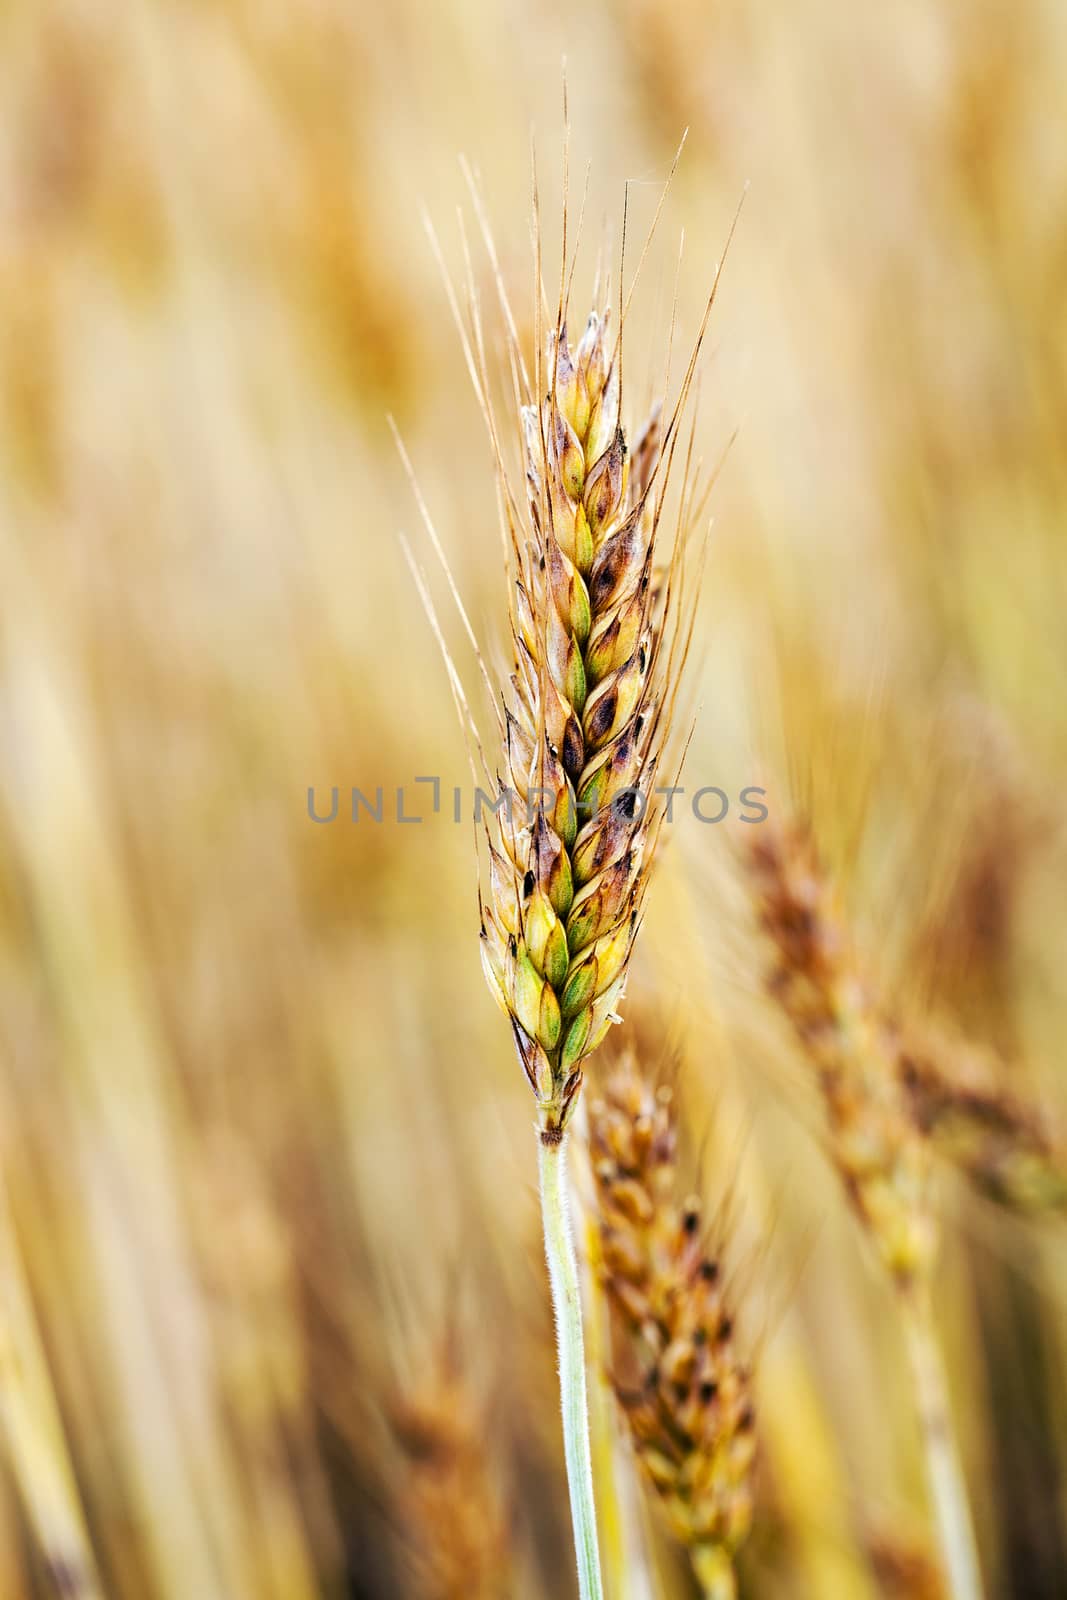   ripe ripened wheat. Filmed close up shot.